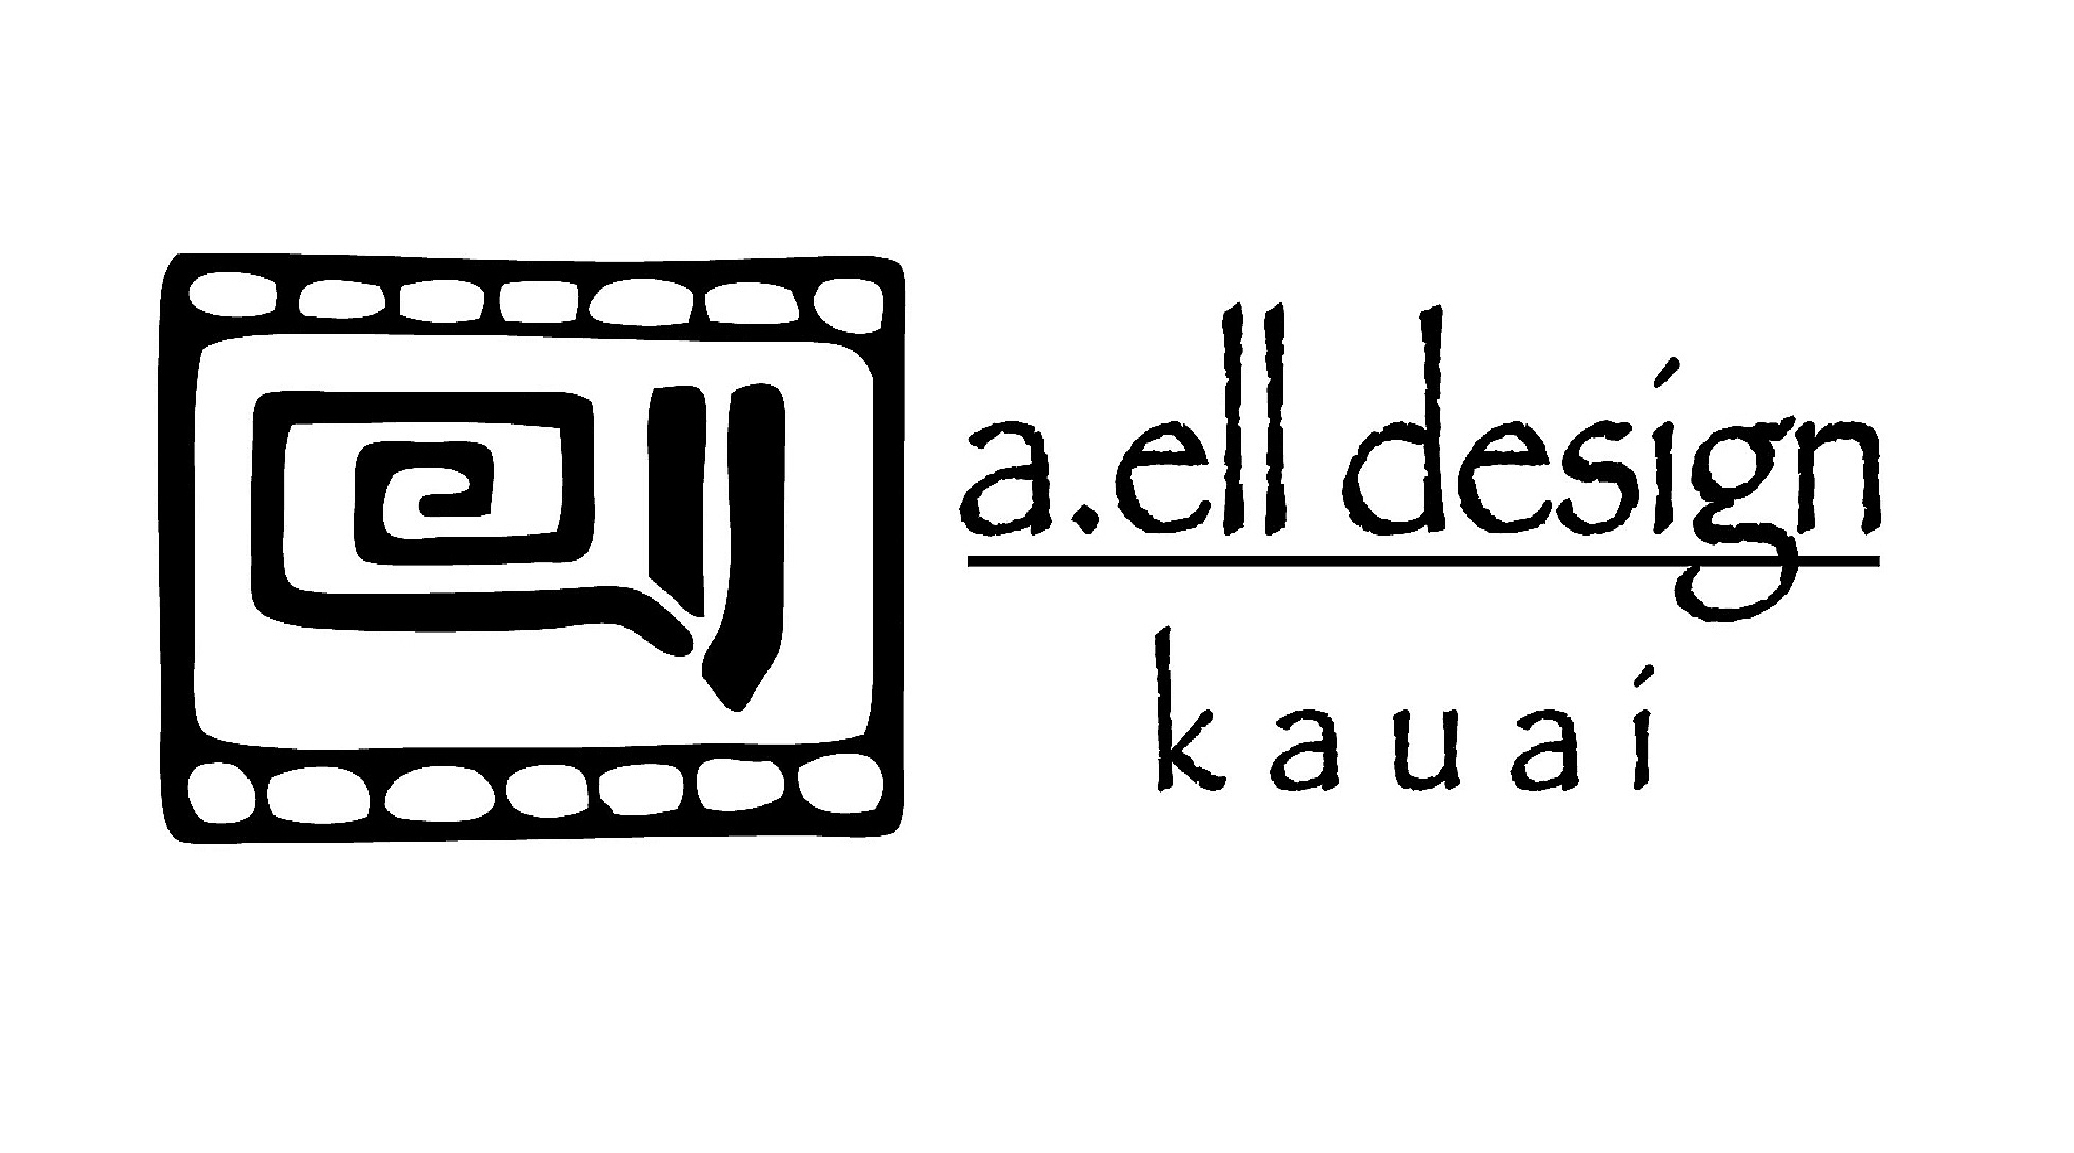  - A_Ell-design-logo 600